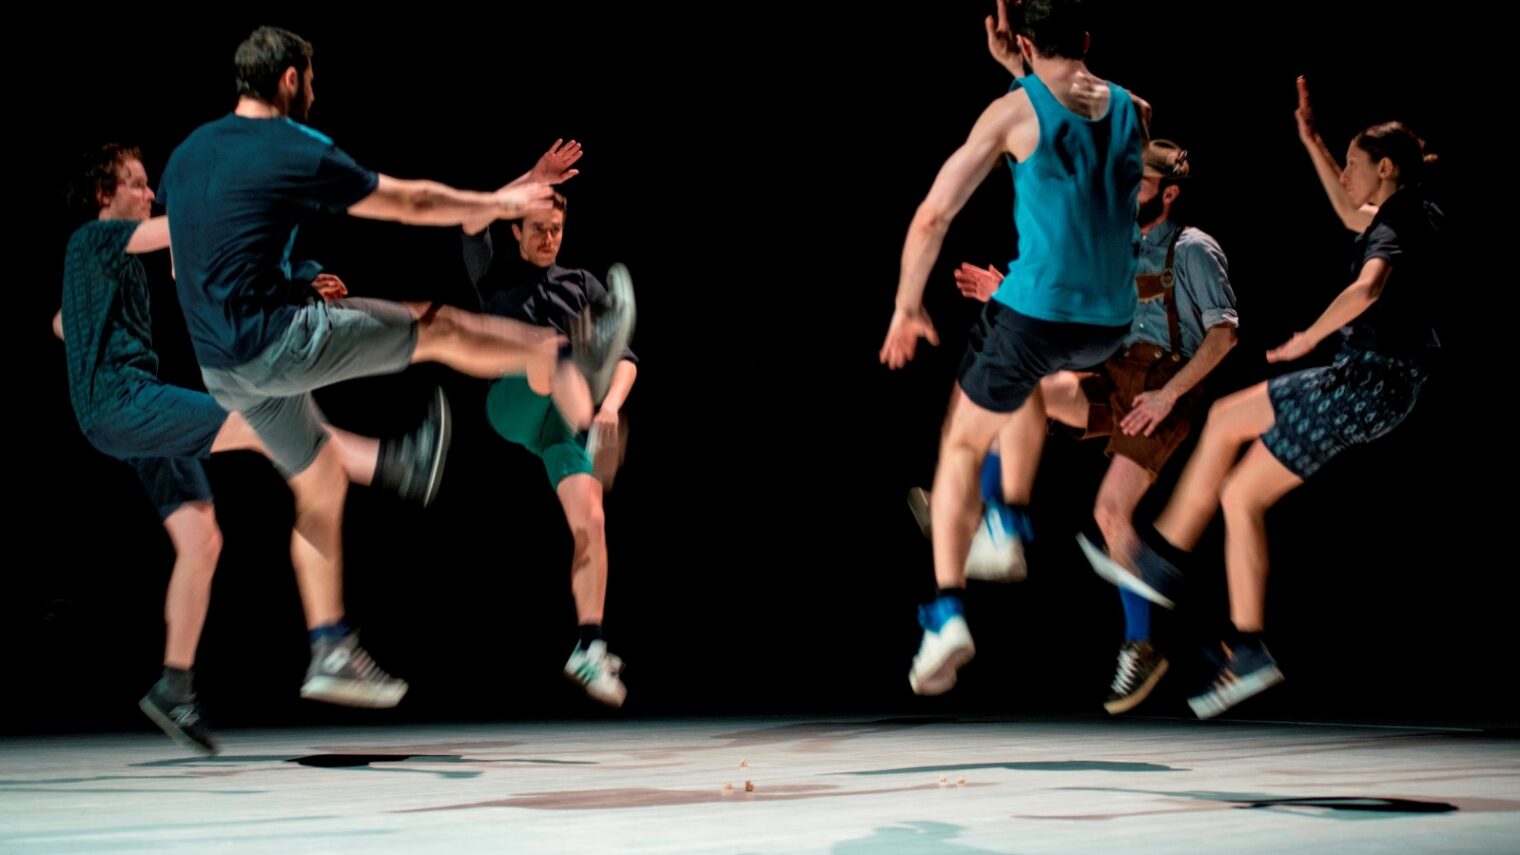 Italian choreographer Alessandro Sciarroni’s acclaimed work, “Folk-s, will you still love me tomorrow?” is on the 2016 Israel Festival bill. Photo by Andrea Macchia